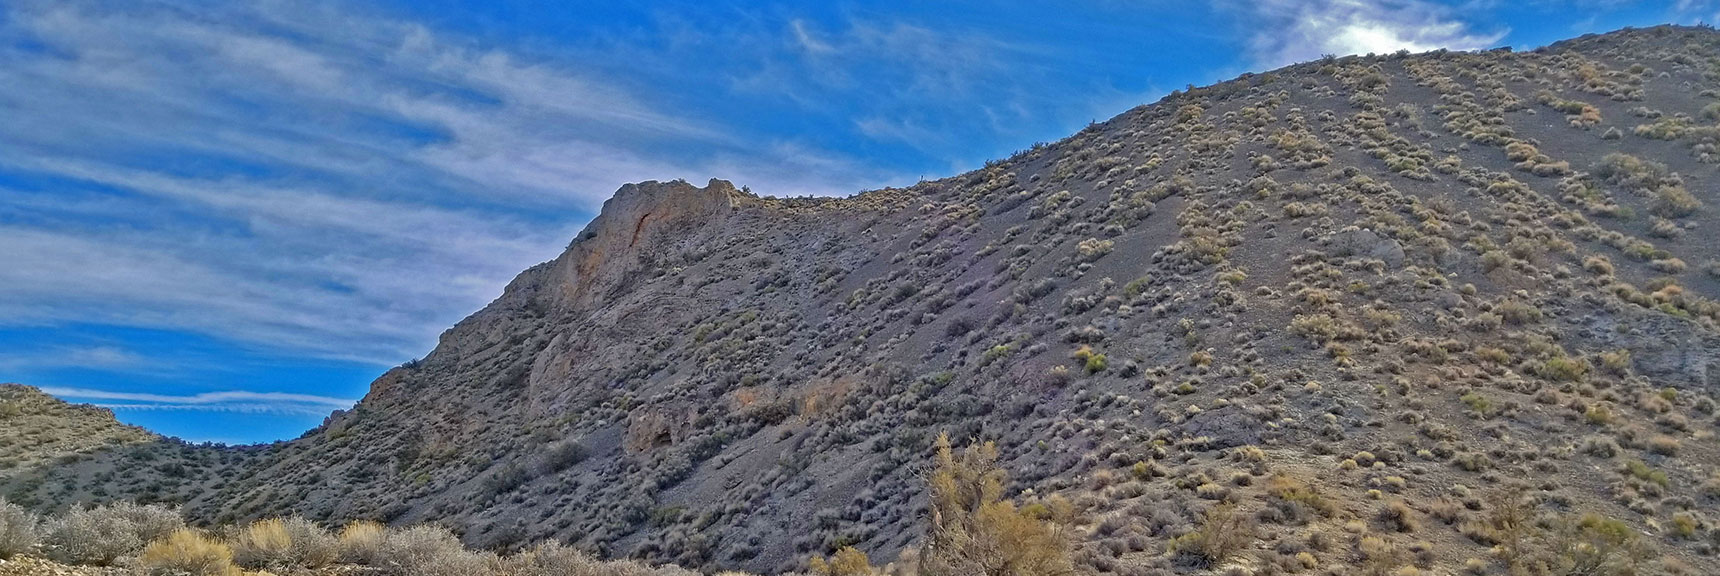 View Back to Steepest Area of Gass Peak Gauntlet Just Below Mid-Summit Rocky Bluff Area. | Gass Peak Grand Crossing | Desert National Wildlife Refuge to Centennial Hills Las Vegas via Gass Peak Summit by Foot